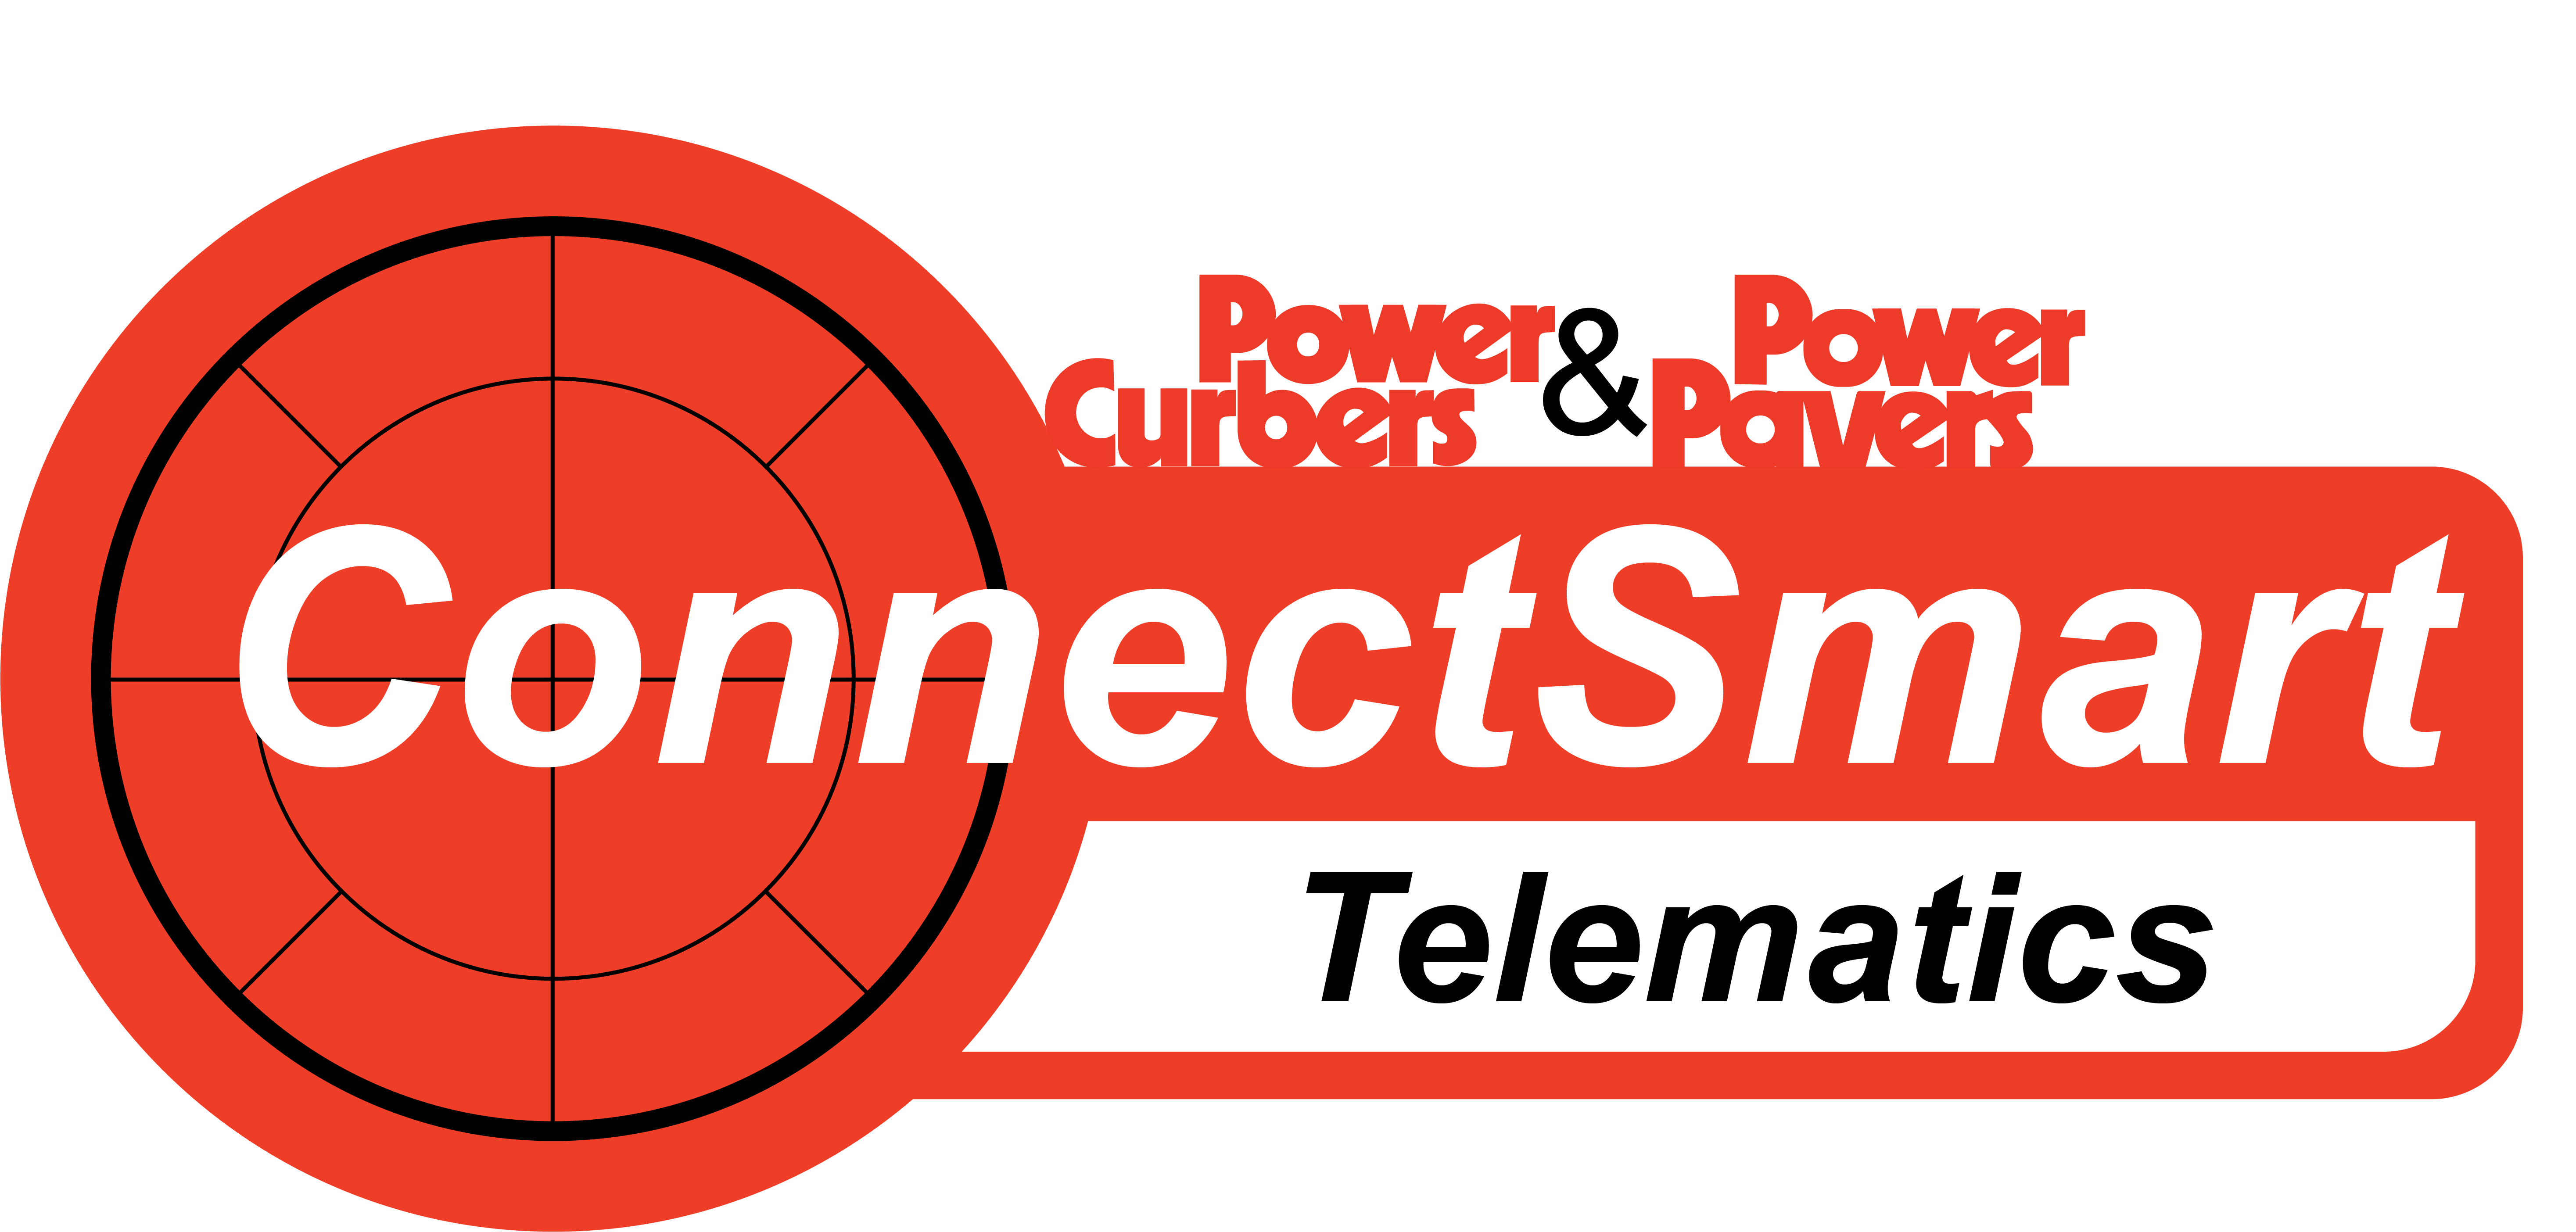 ConnectSmart Telematics Logo